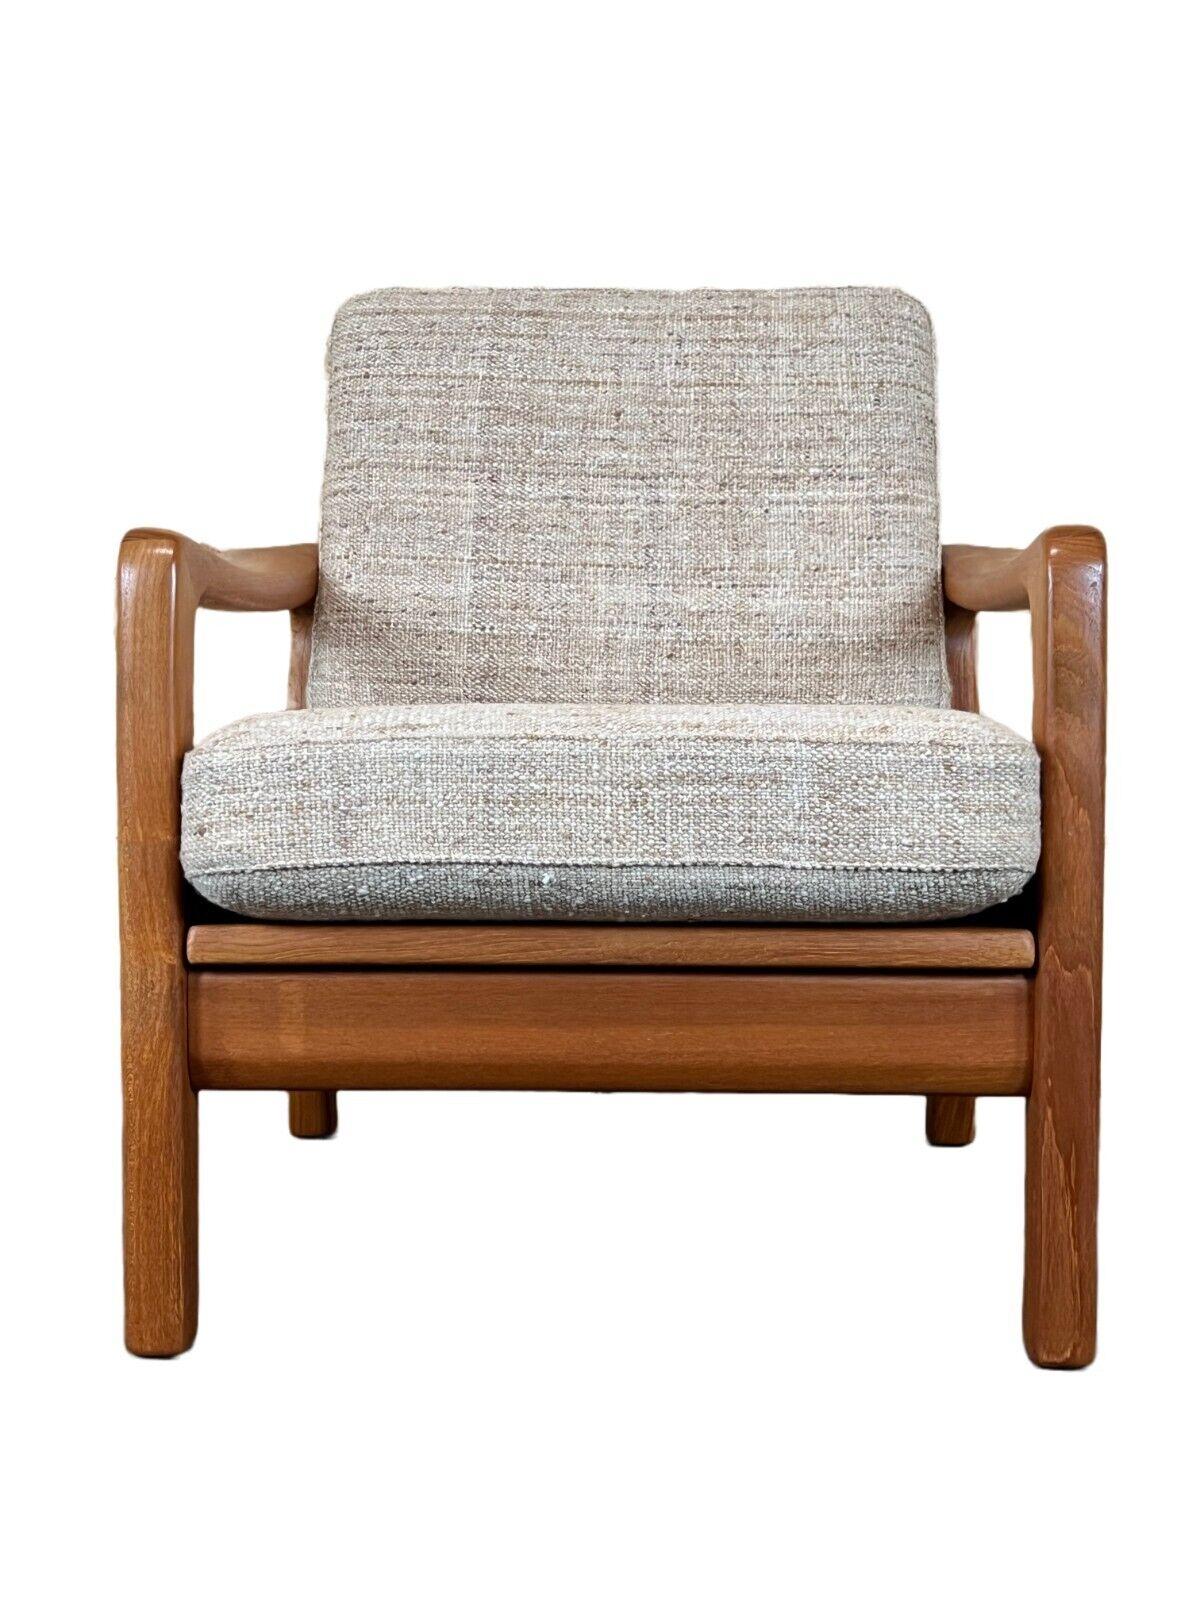 60s 70s Teak Easy chair Juul Kristensen Danish Denmark Design 60s.

Object: Easy Chair

Manufacturer: Juul Kristensen

Condition: good

Age: around 1960-1970

Dimensions:

Width = 75cm
Depth = 83cm
Height = 81cm
Seat height =